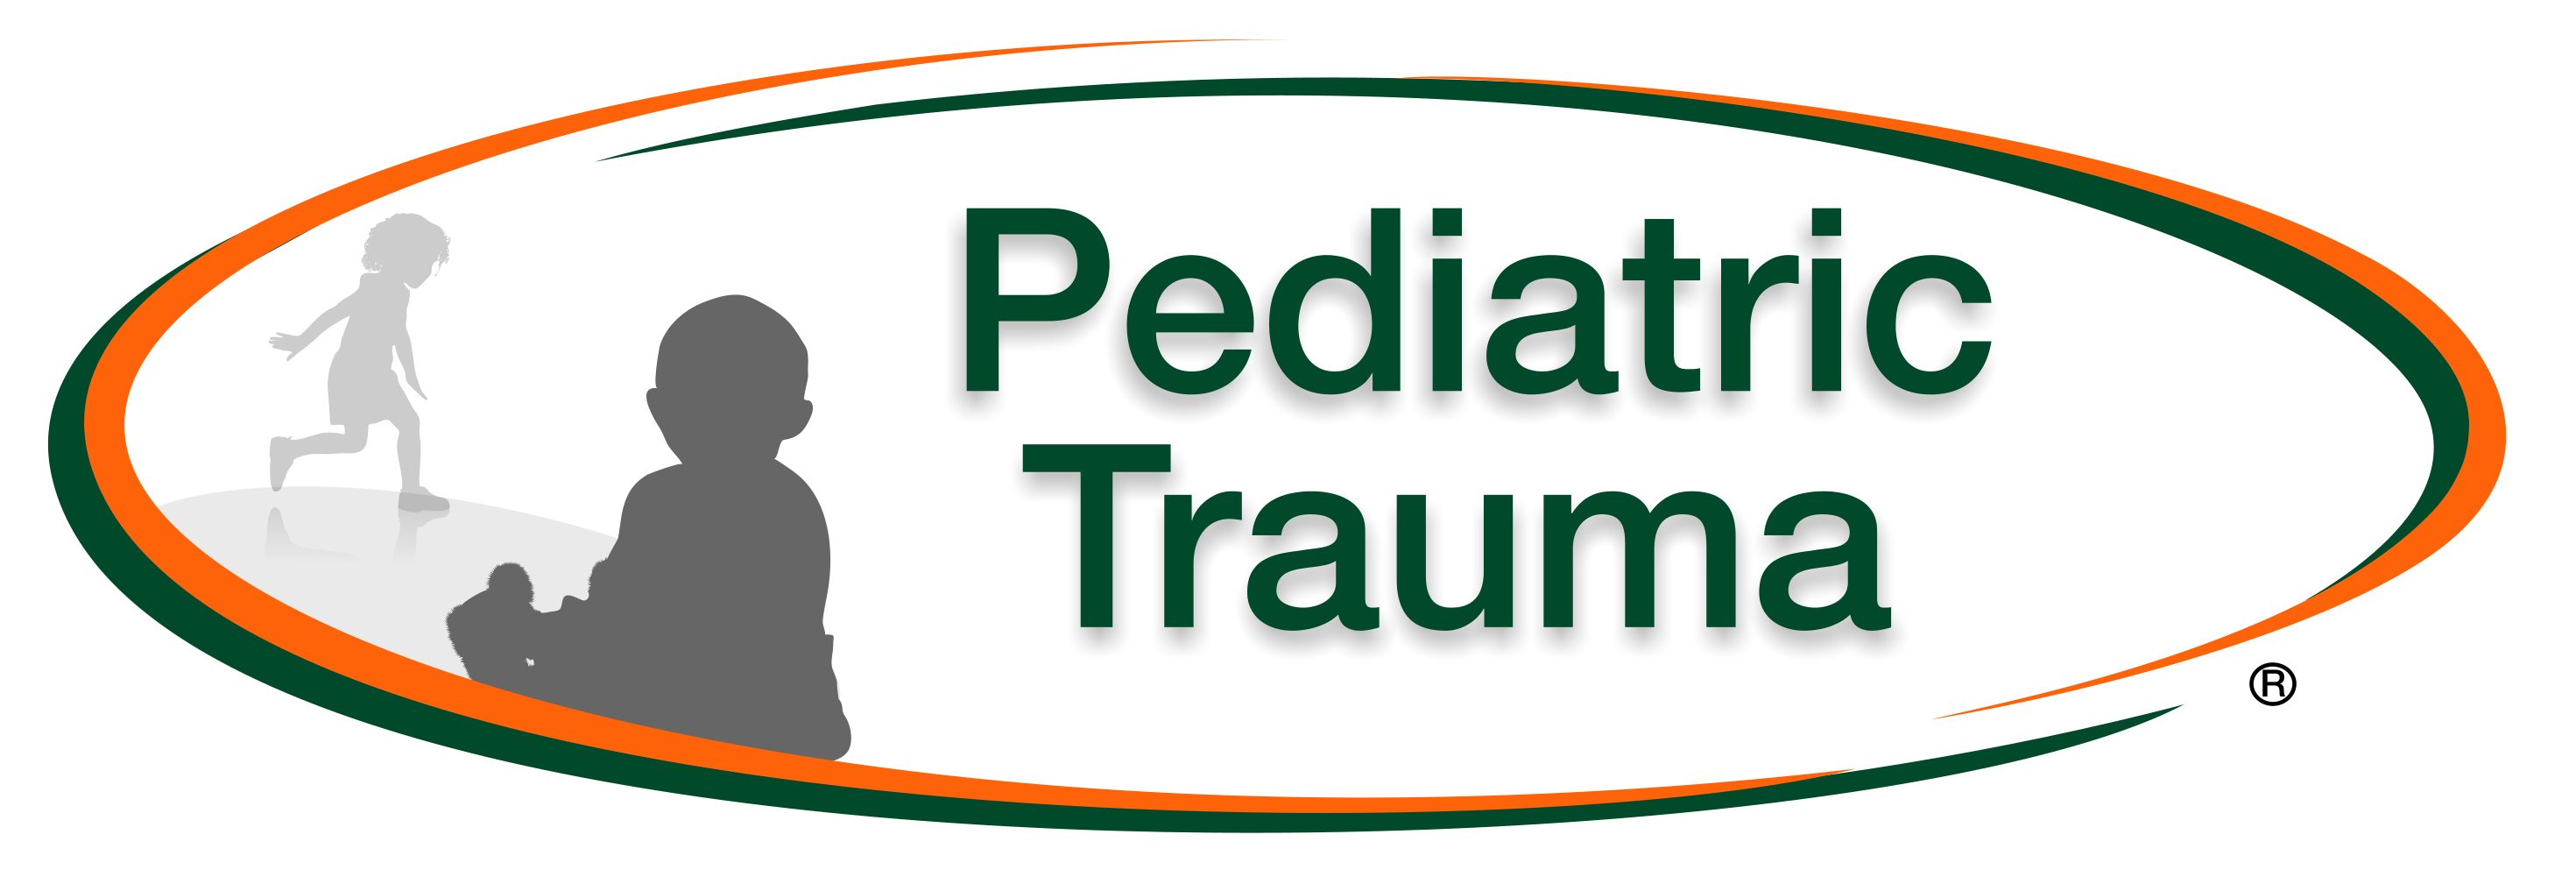 Pediatric Trauma Logo